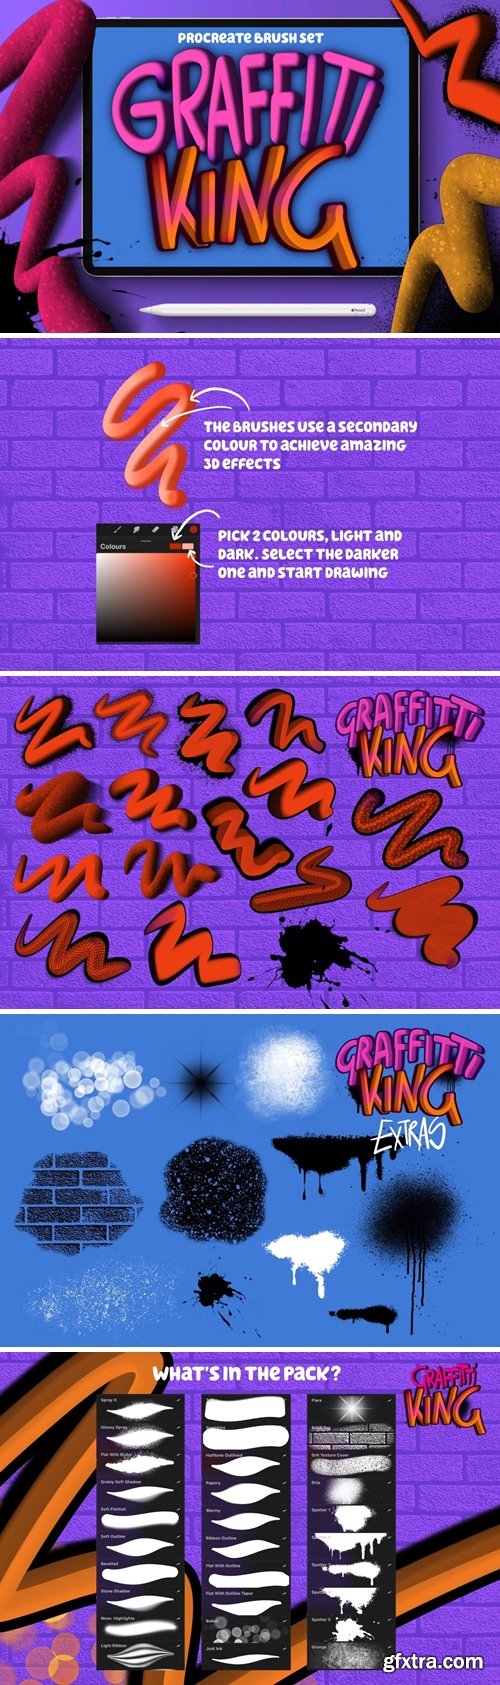 Graffiti King Procreate Brushes